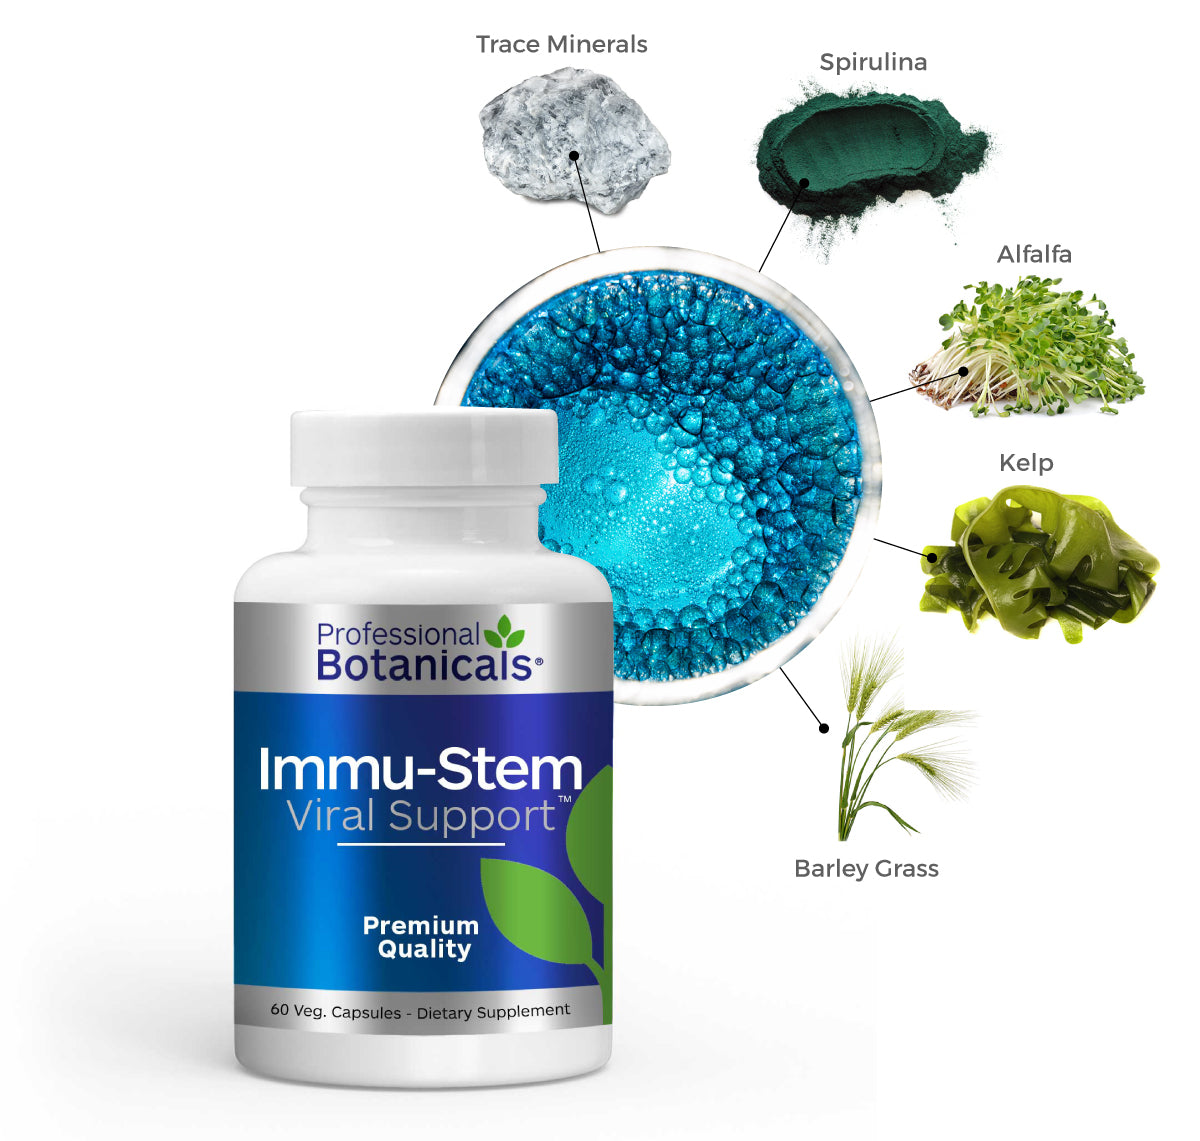 Immu Stem Viral Support key ingredients for best spirulina supplements